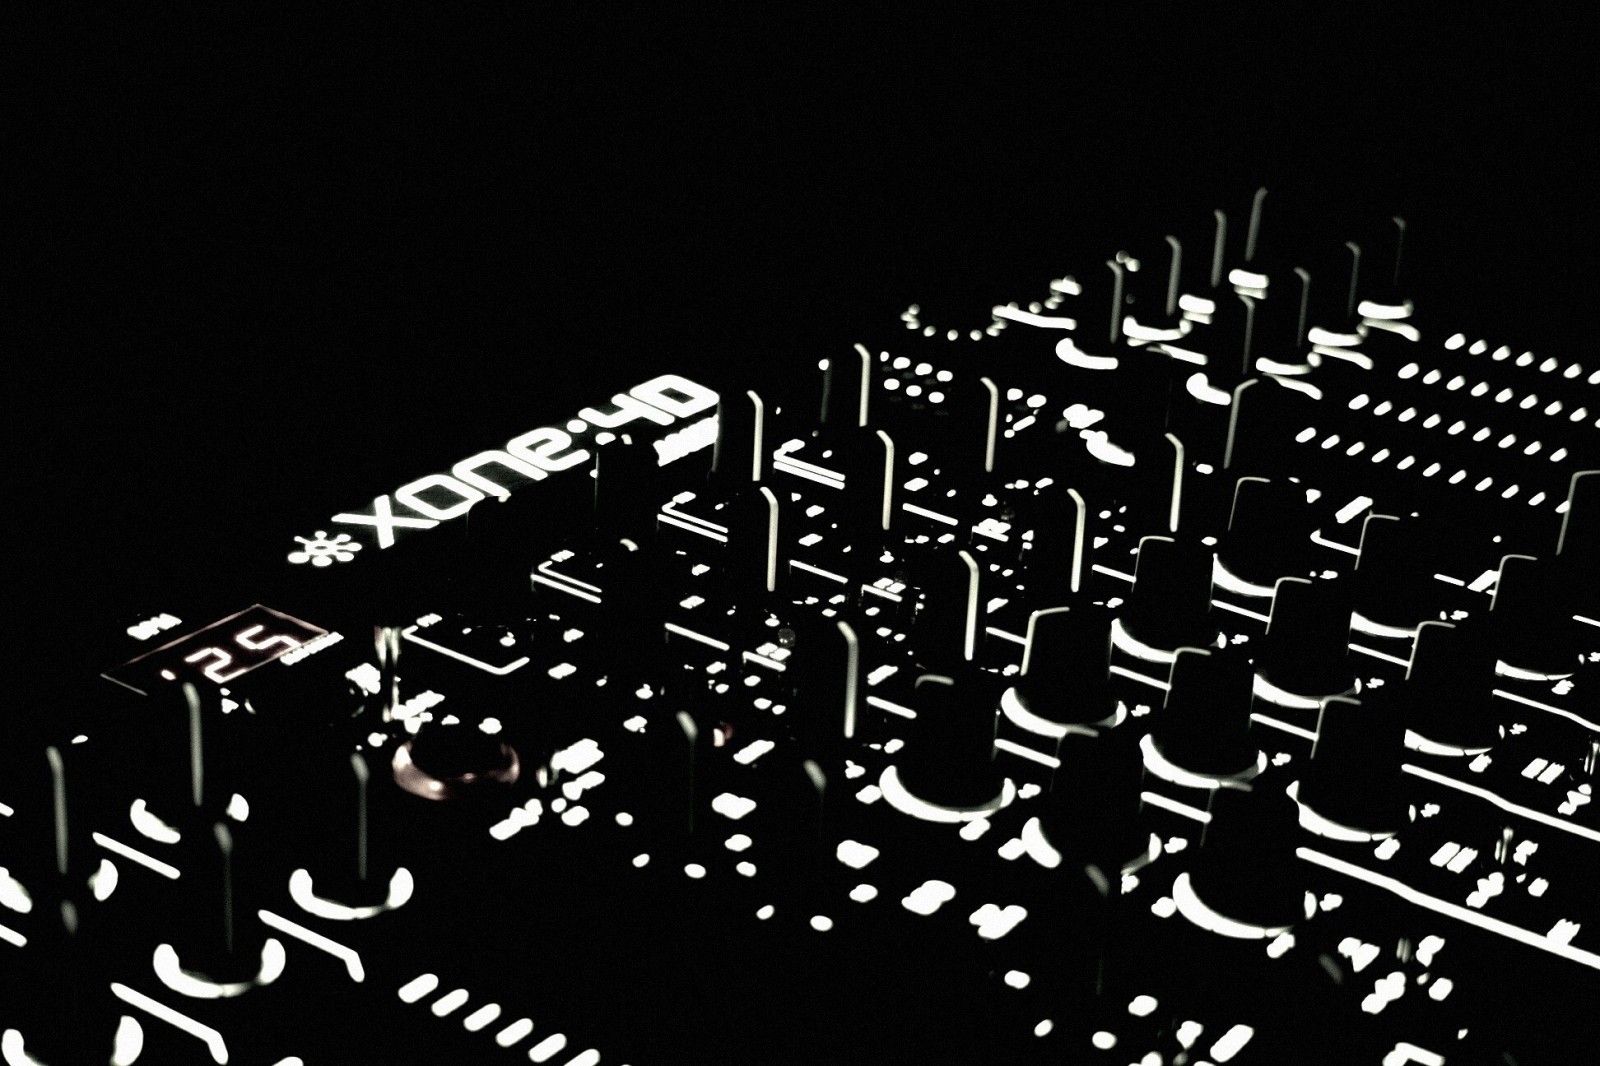 Wallpaper, 1944x1296 px, DJ, sound mixers 1944x1296